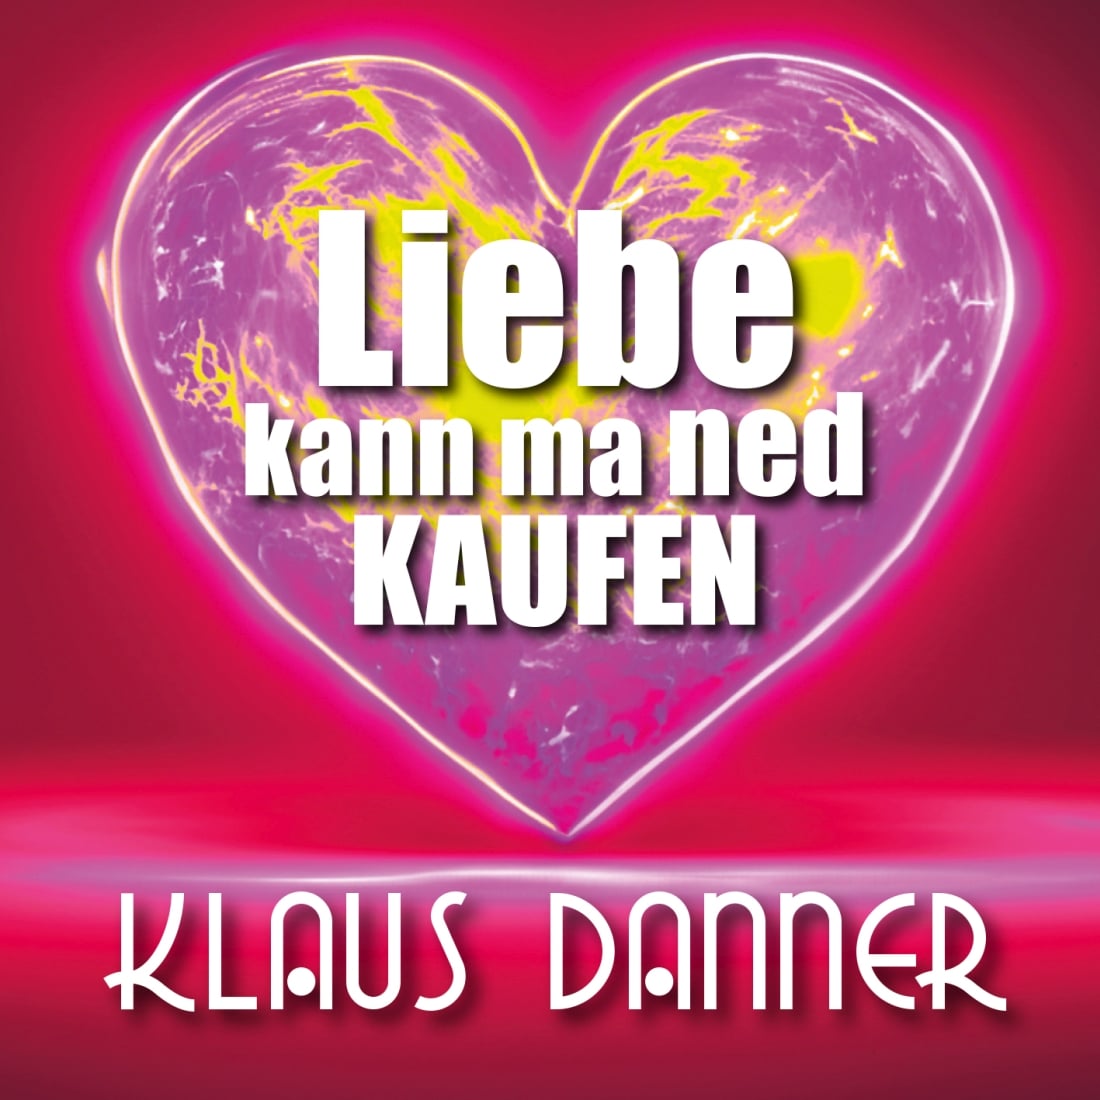 Klaus Danner - Liebe kann ma ned kaufen (Blue Marlin Records)